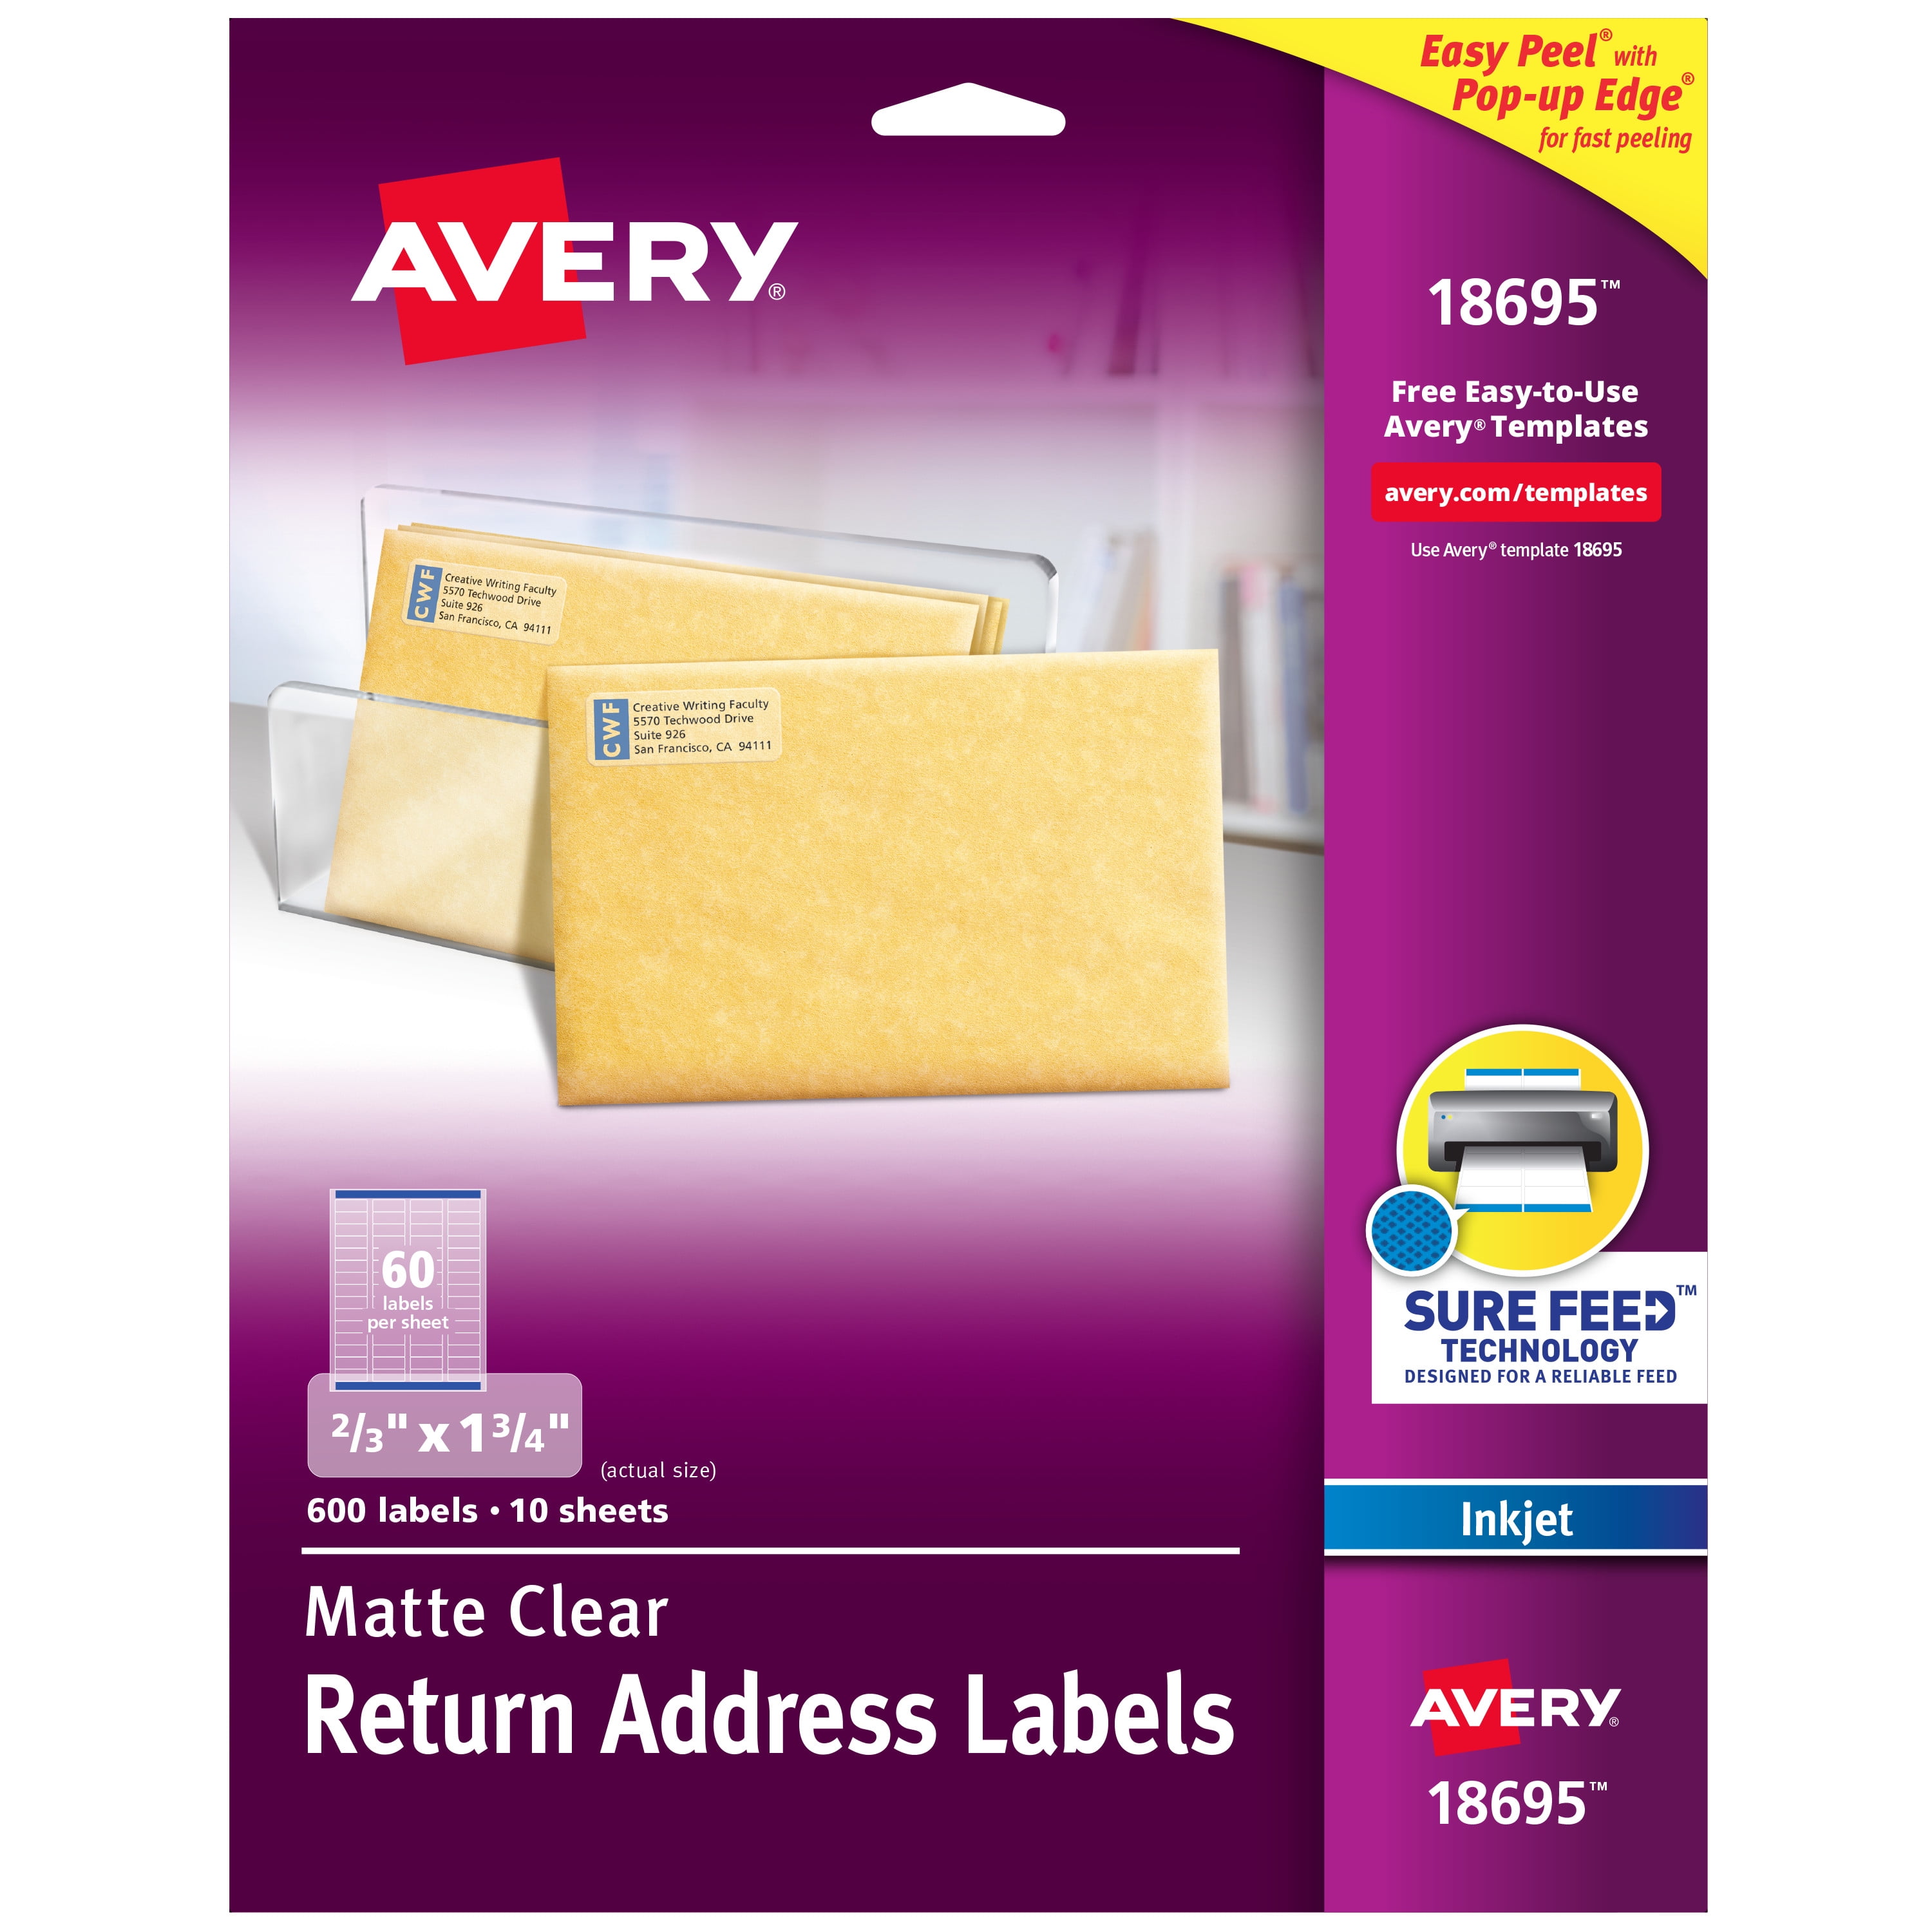 Avery Return Address Labels, 2/3" x 13/4", 600 Clear Labels (18695